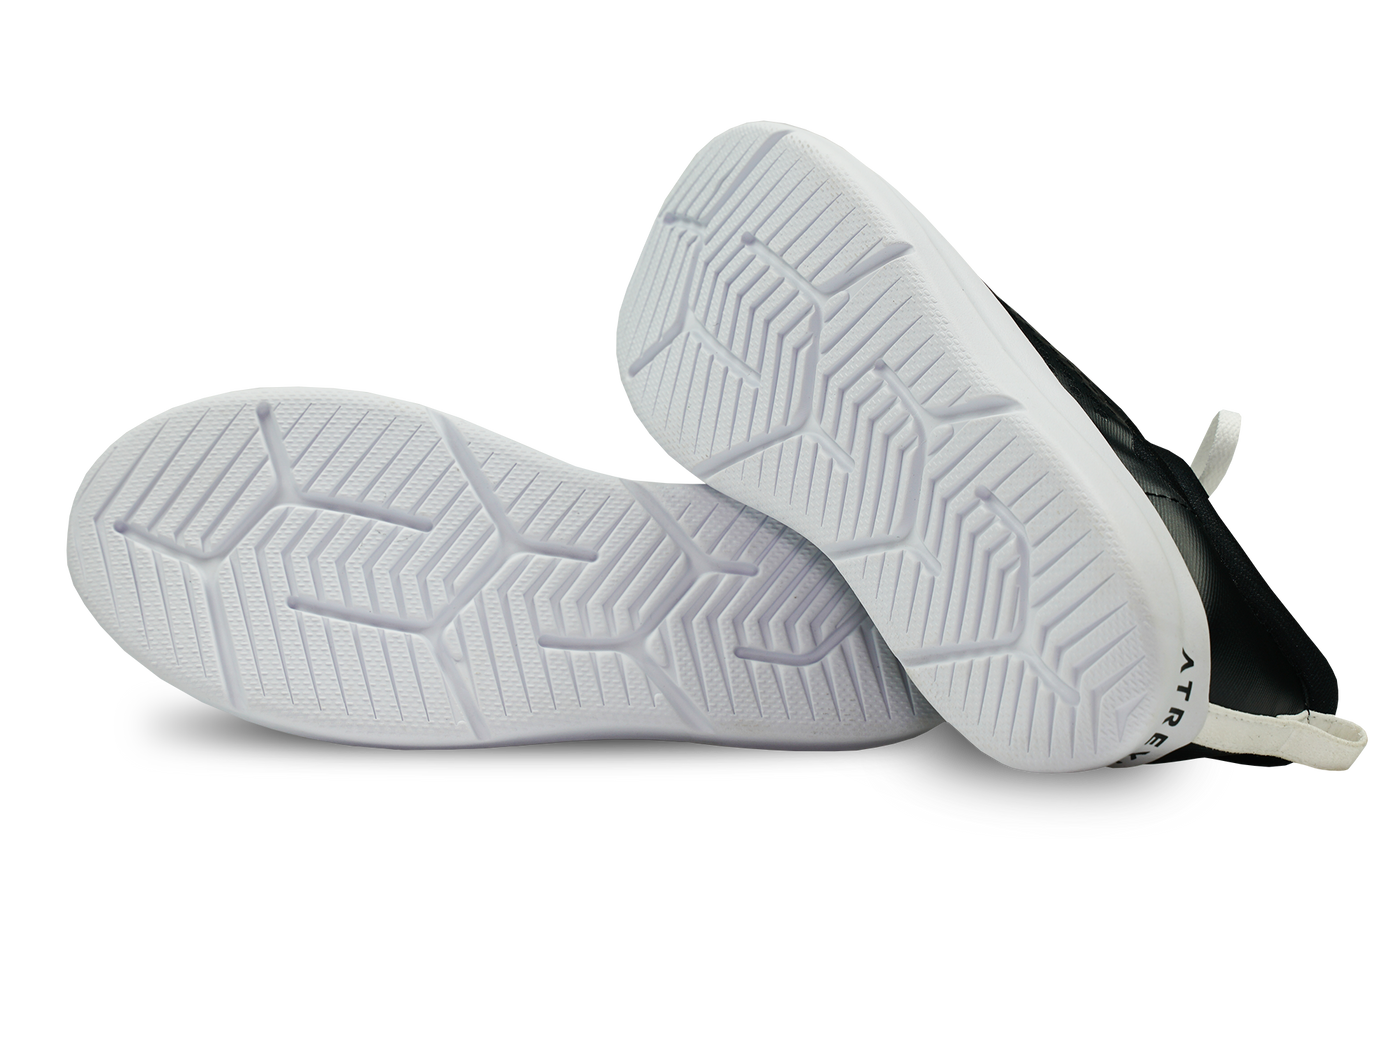 Atreyu Base Model - Lightweight running shoes pair outsole black